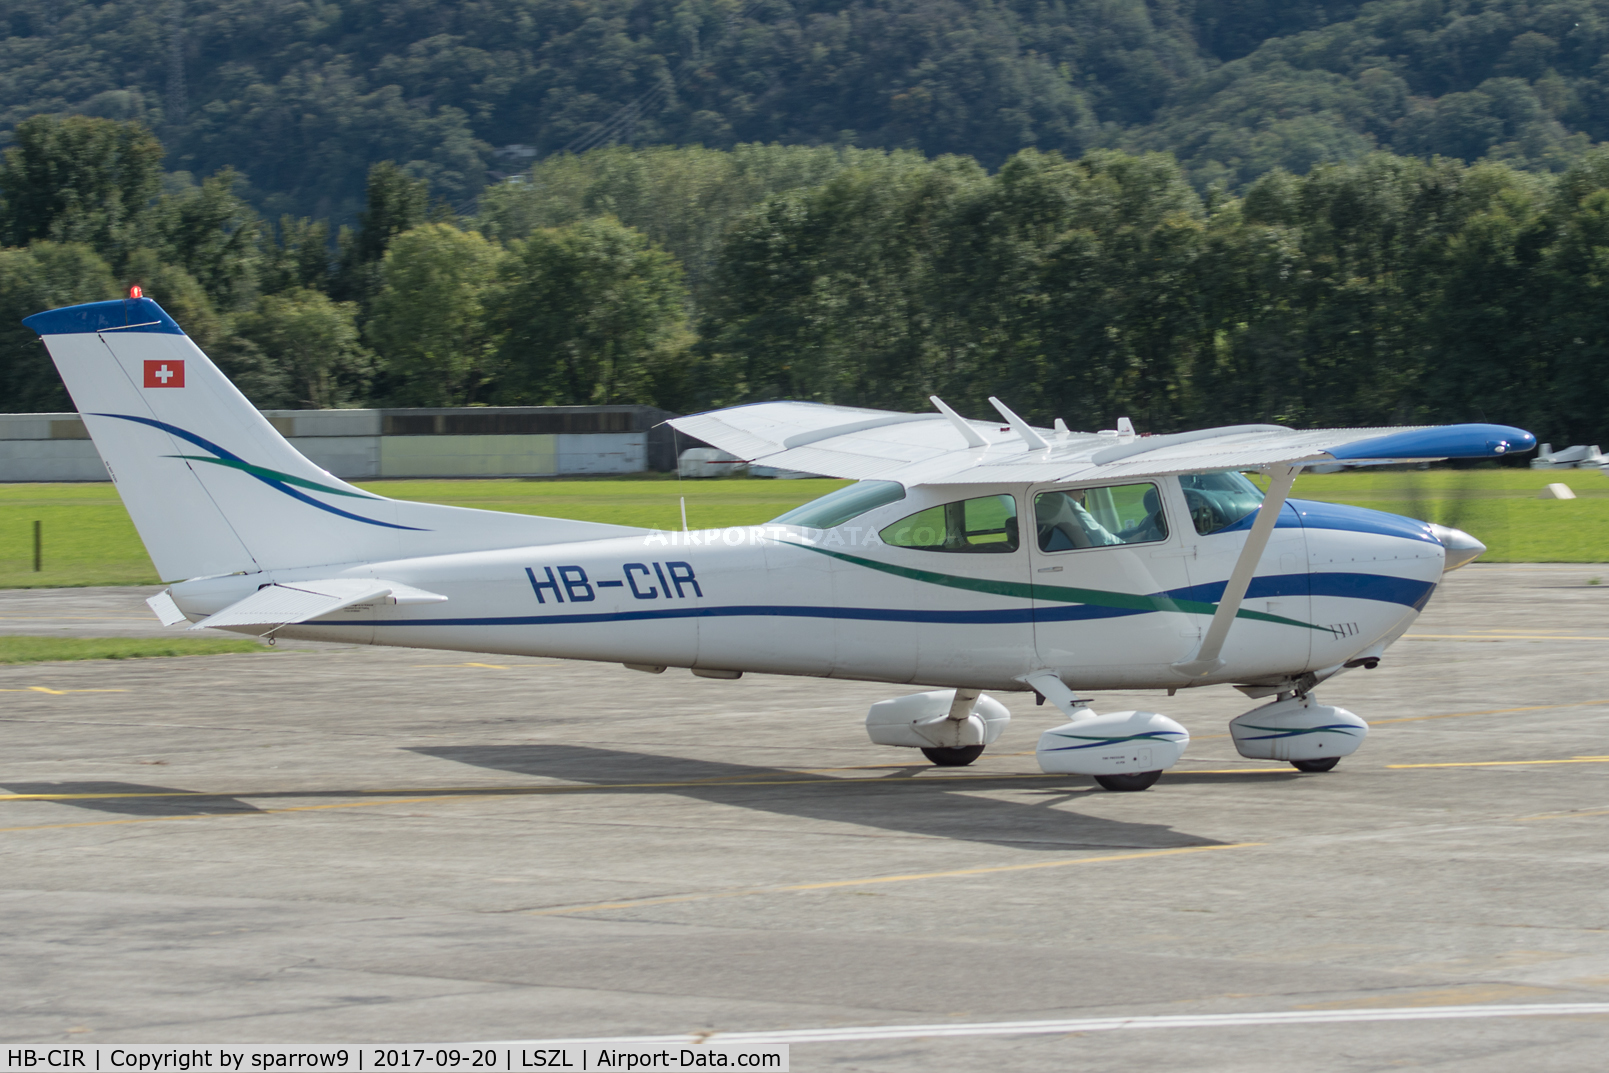 HB-CIR, 1978 Cessna 182Q Skylane C/N 182-66647, New paint. At Locarno-Magadino, civ. side.